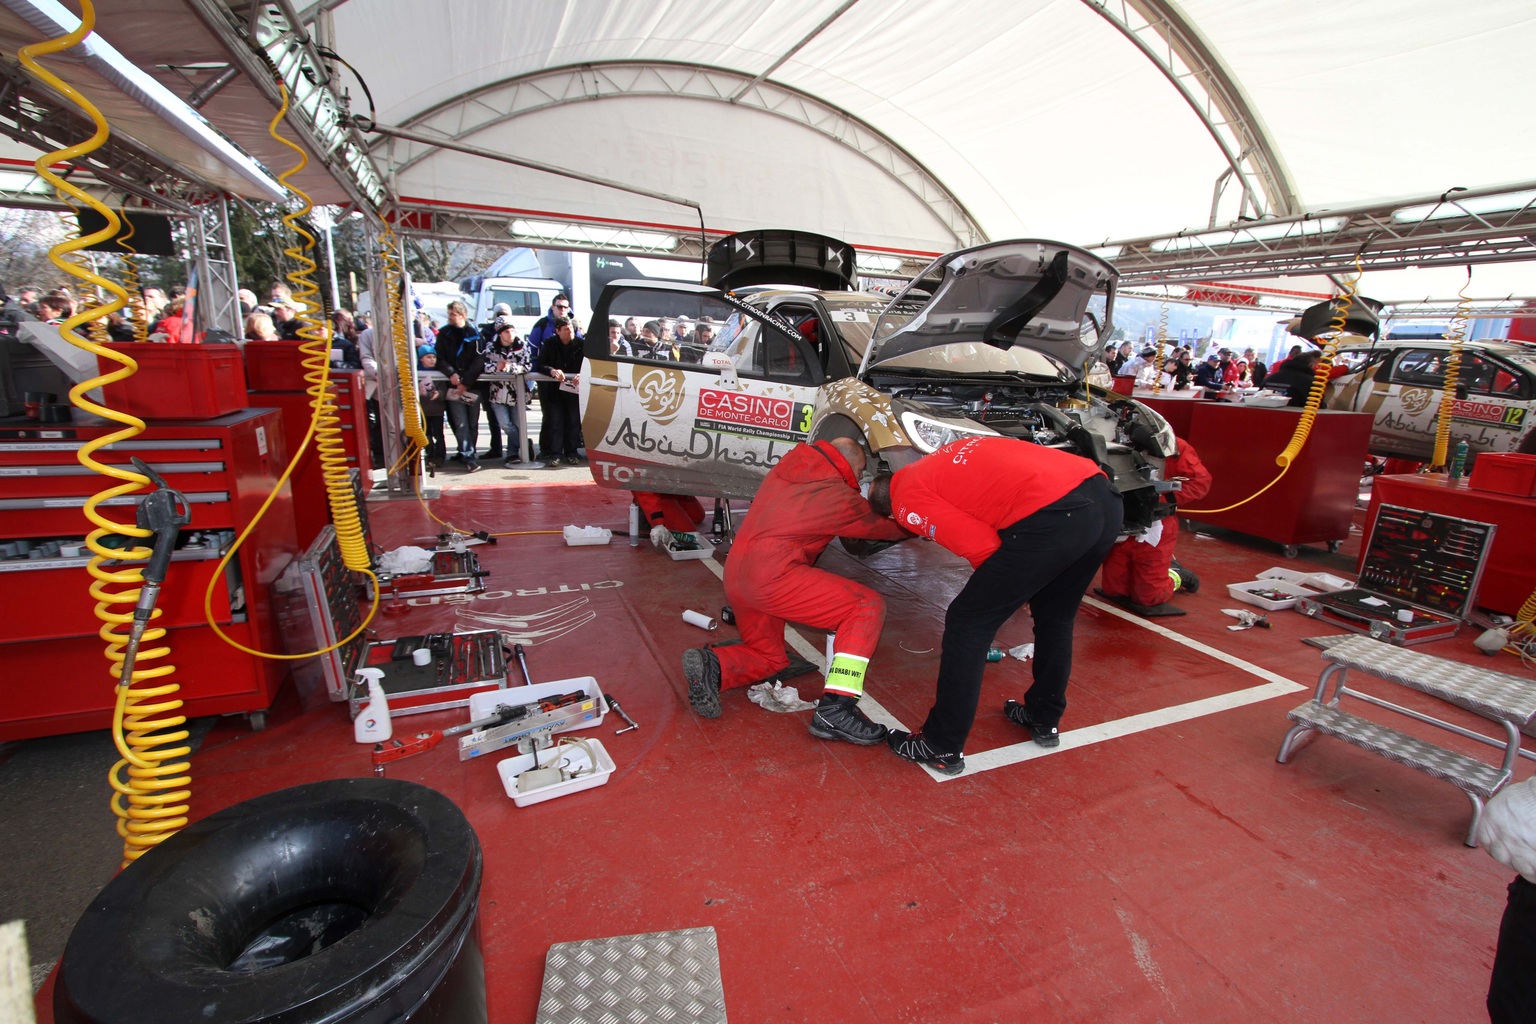 2011 Citroën DS3 WRC Gallery